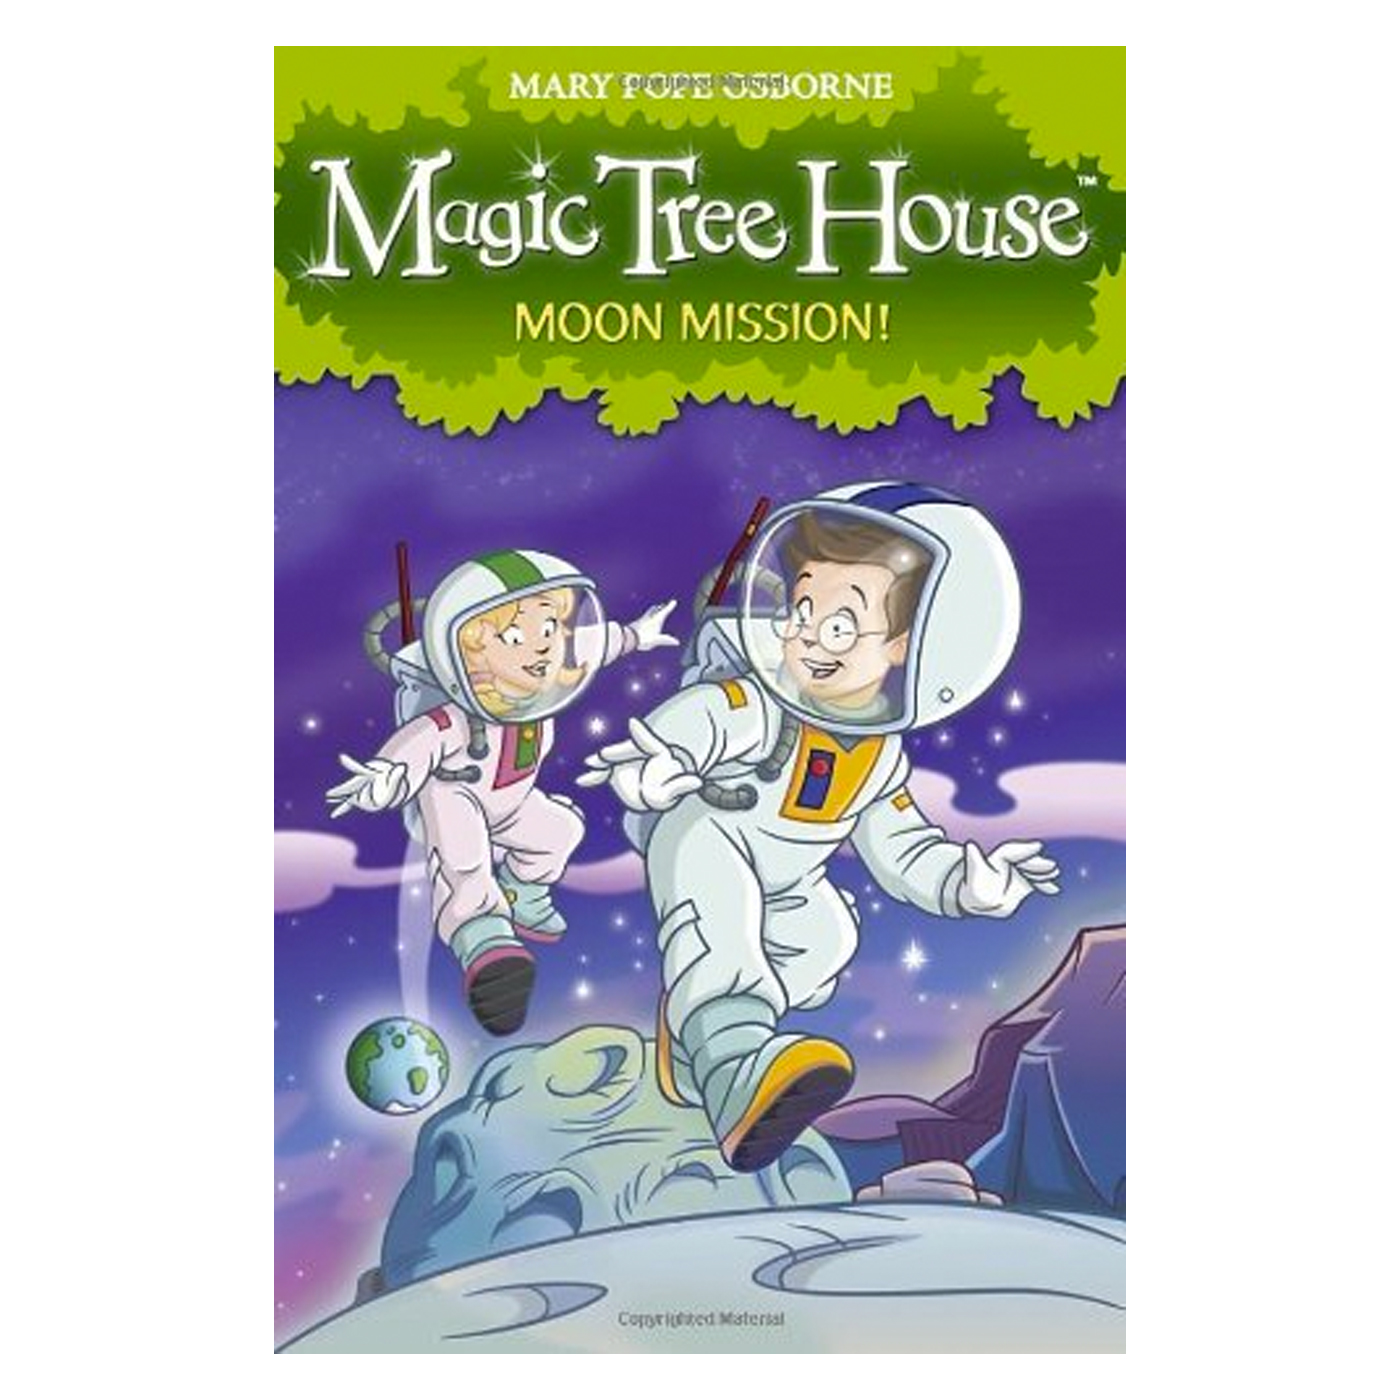  Magic Tree House 8: Moon Mission!